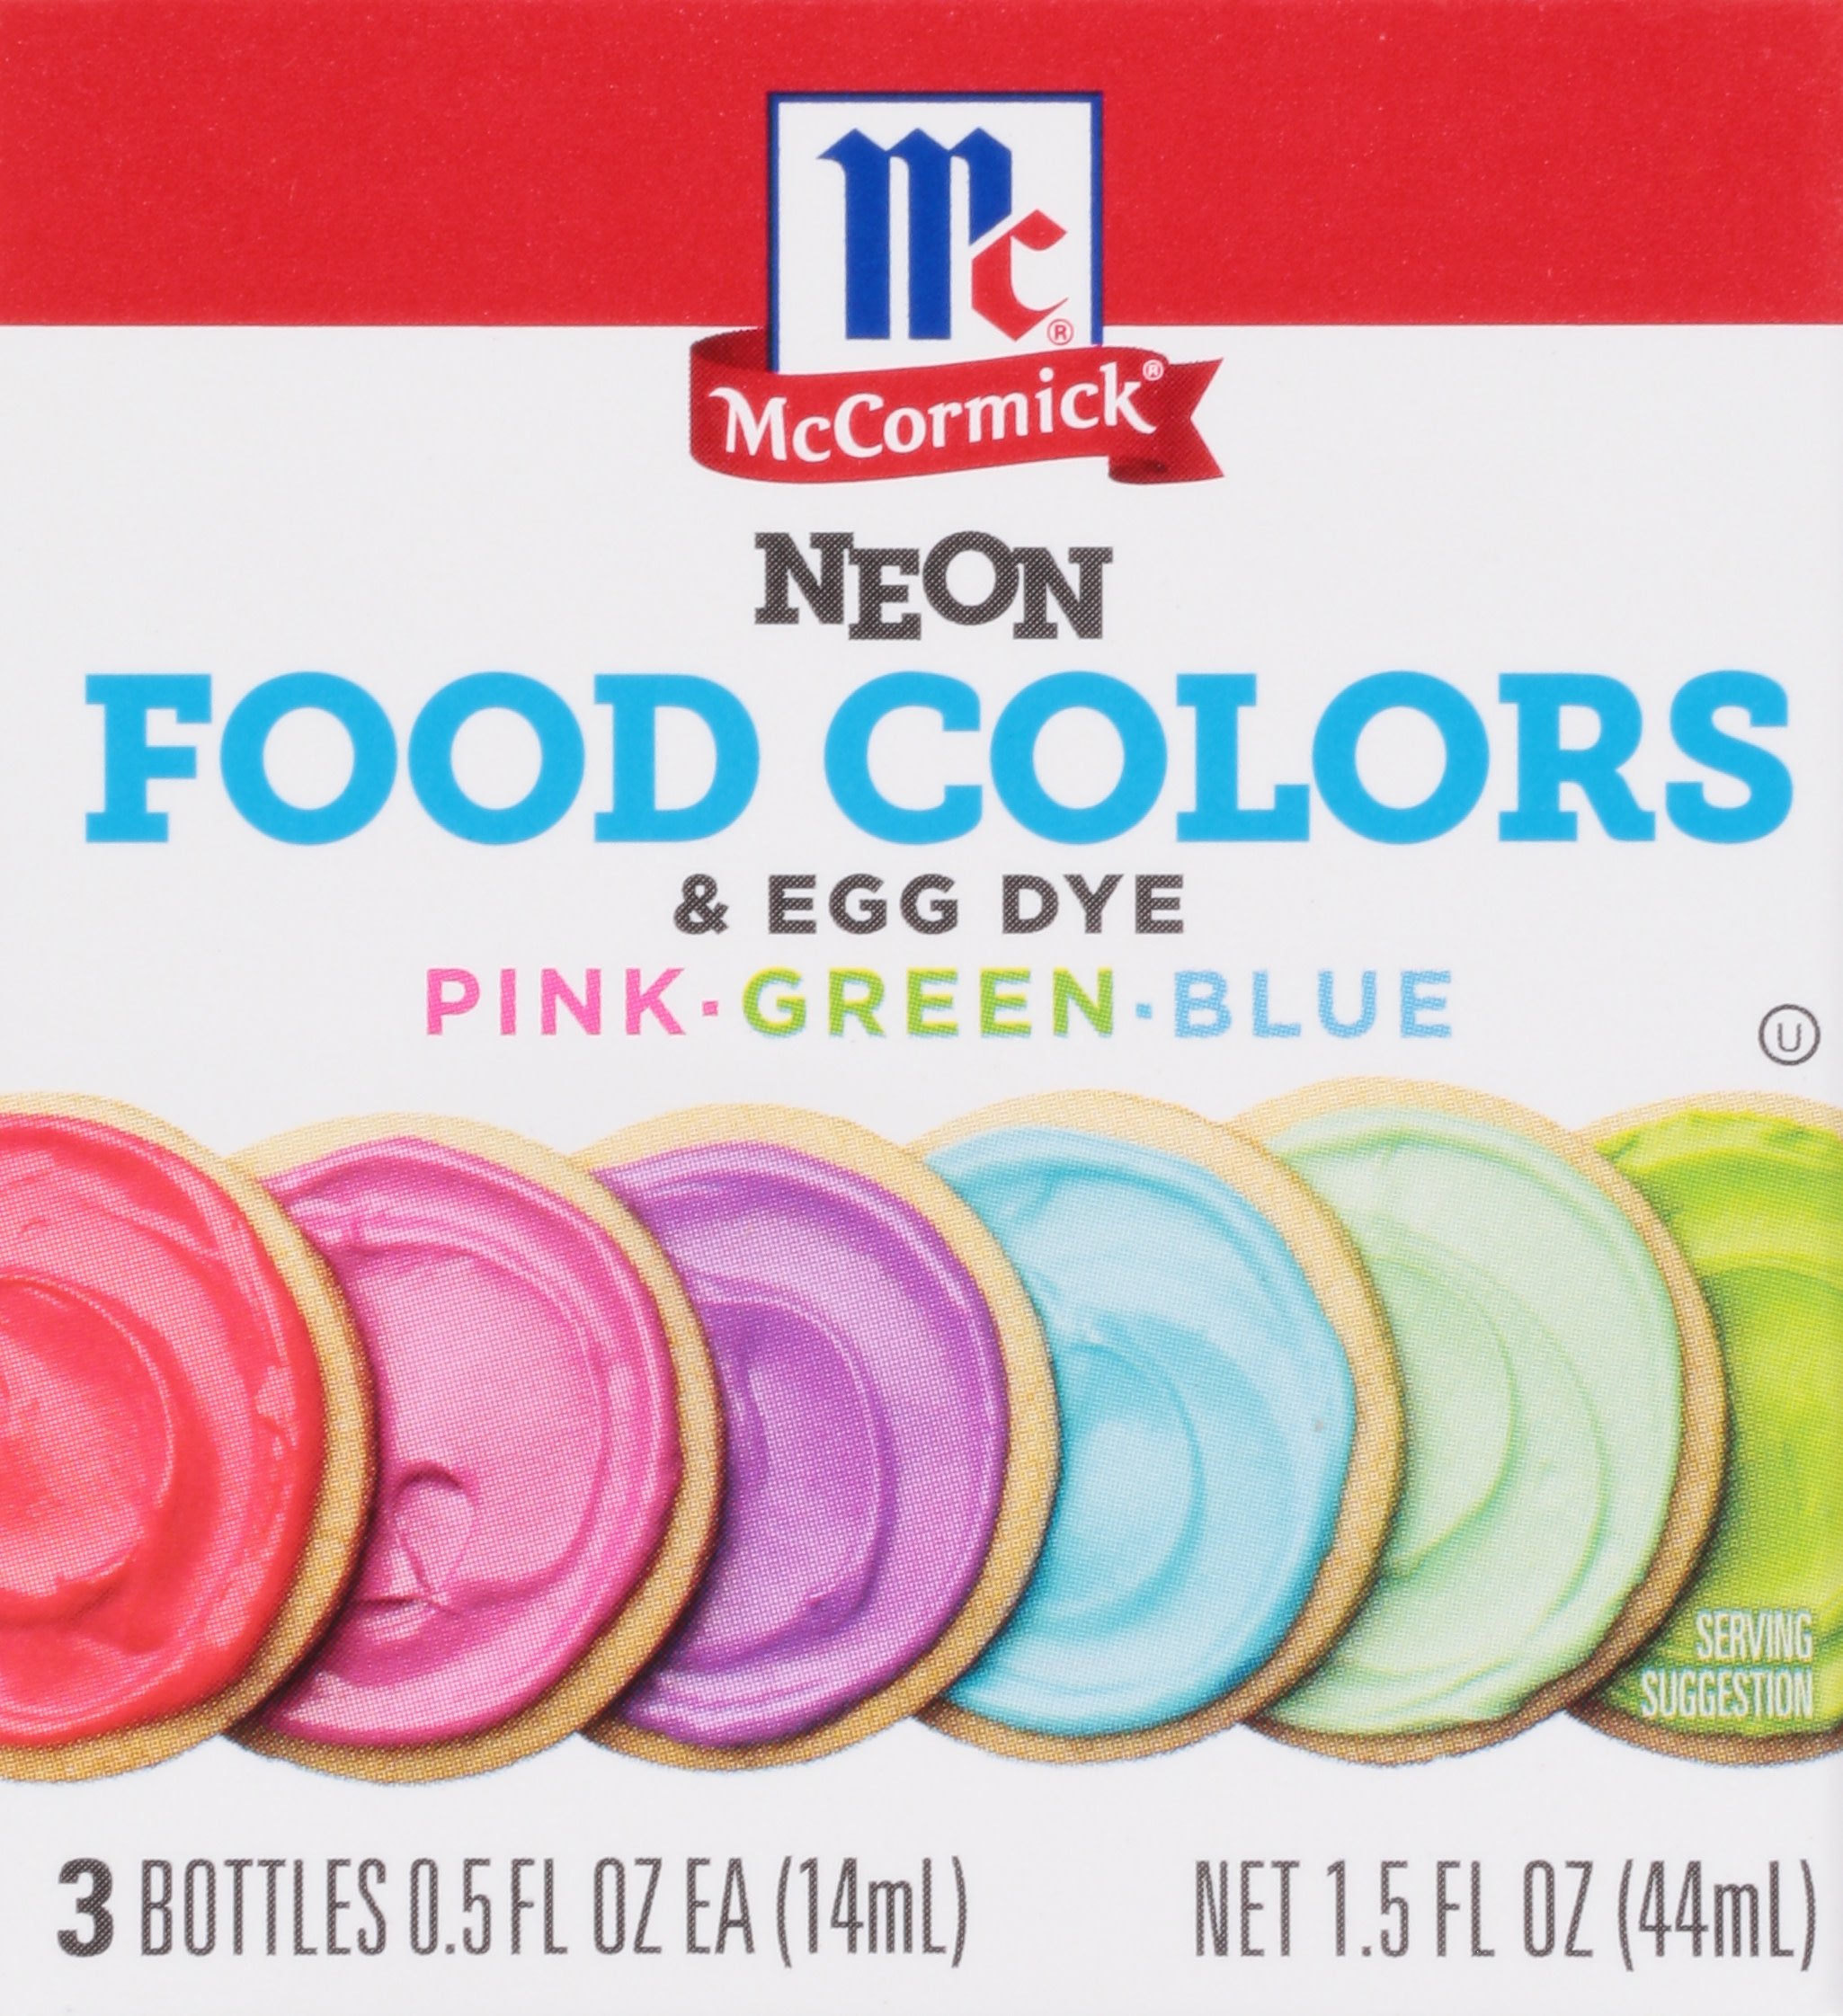 Wilton 4 Gel Food Colors - Shop Food Color at H-E-B